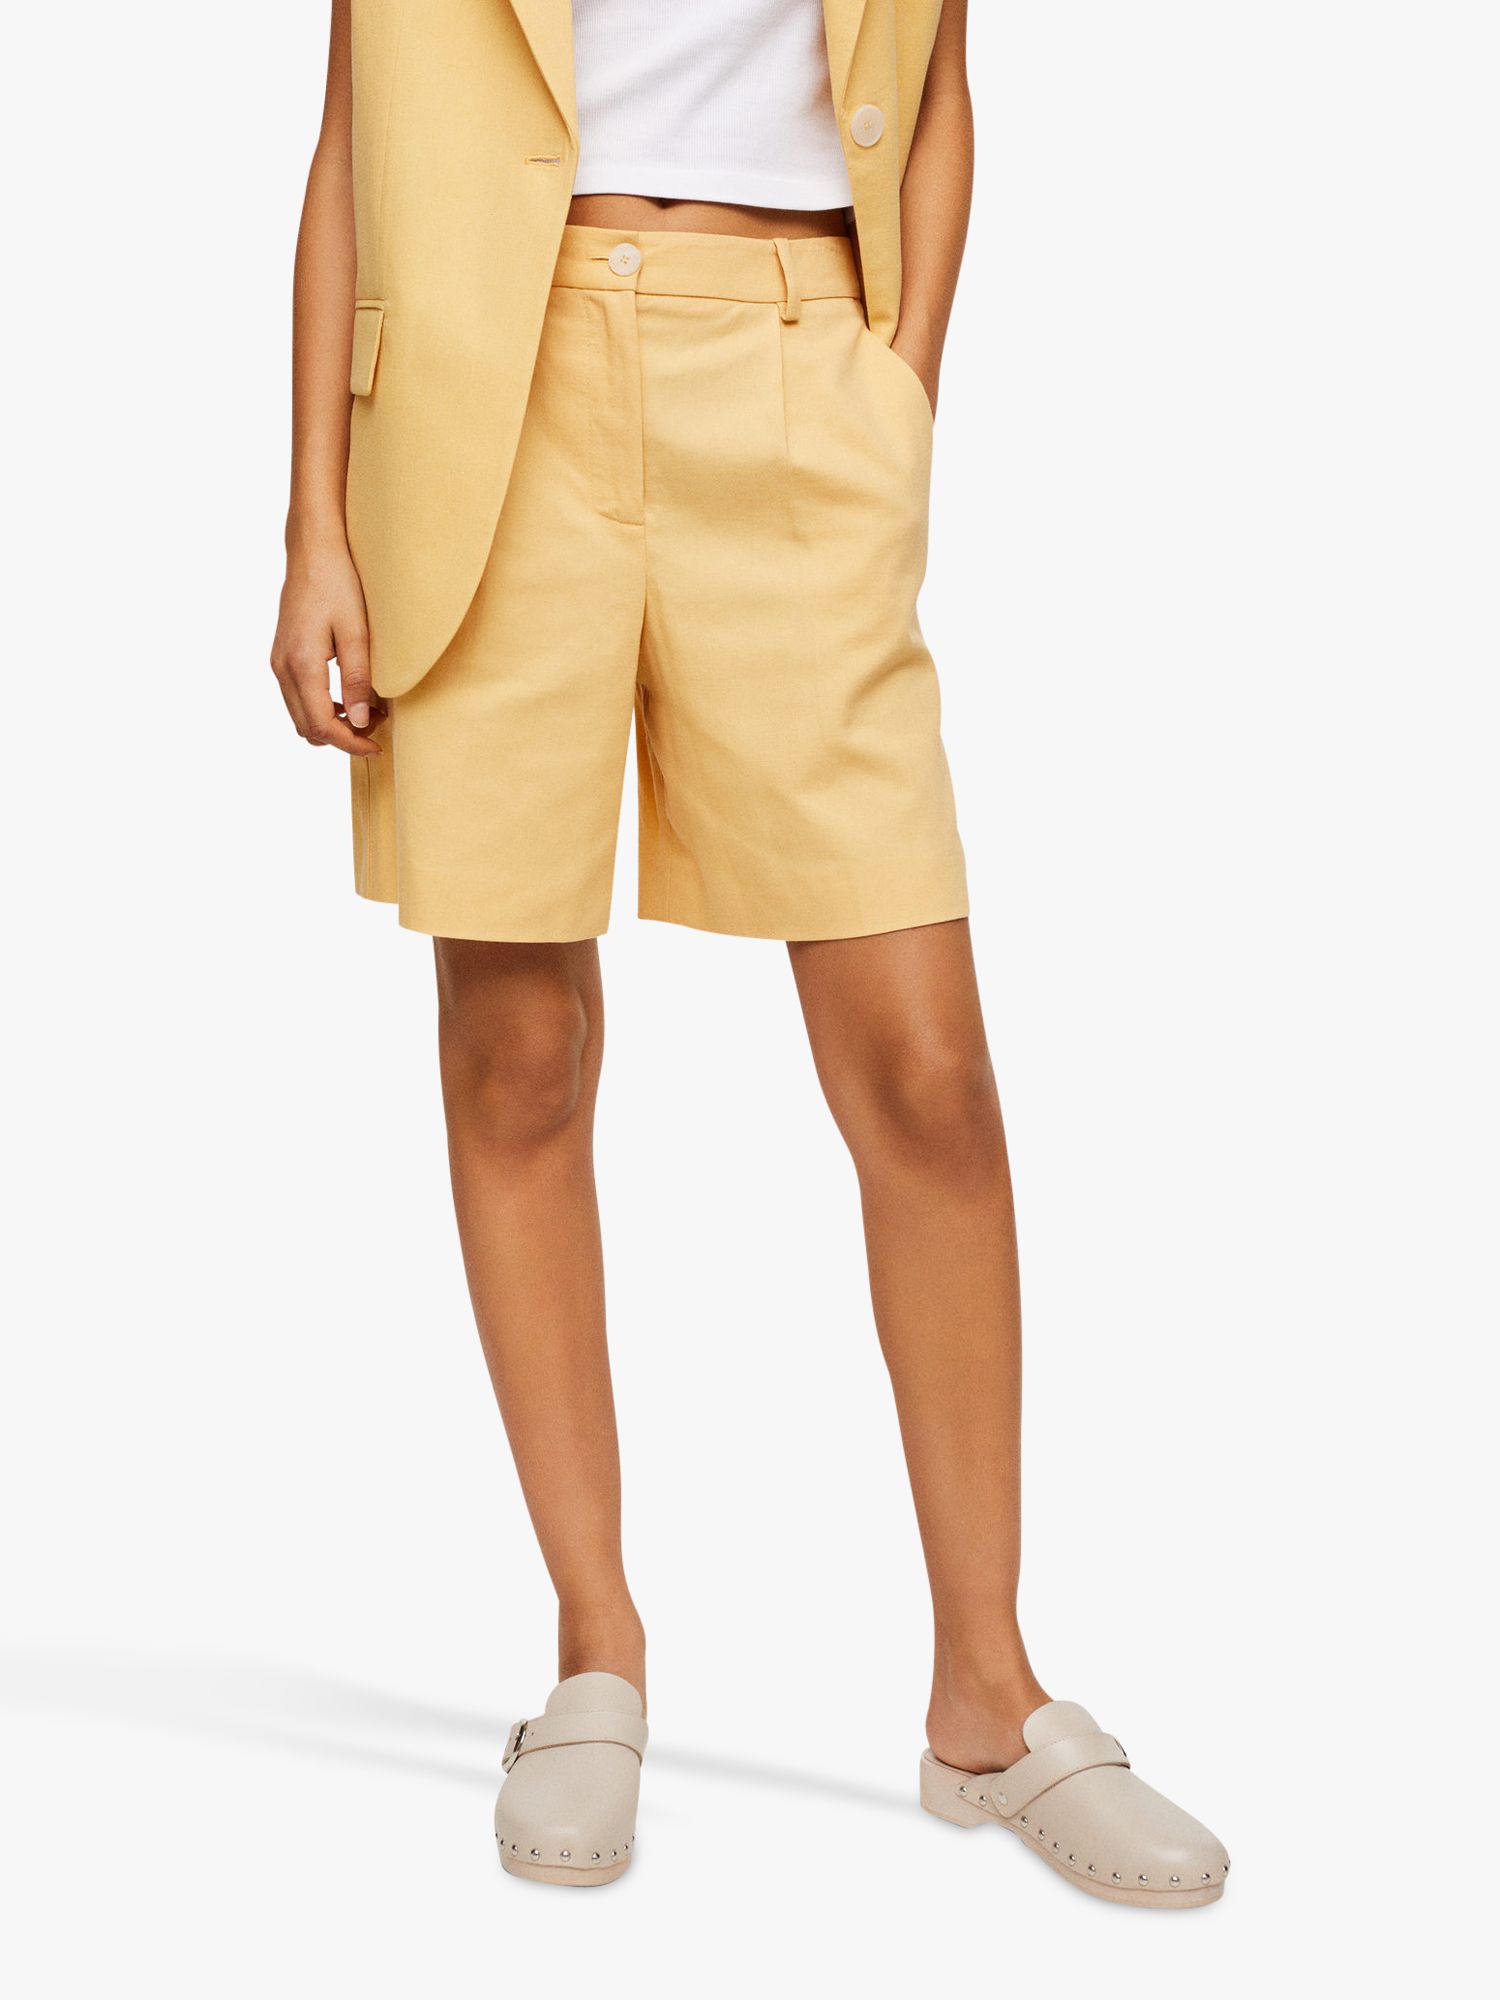 Mango Cotton-Linen Bermuda Shorts, Yellow at John Lewis & Partners